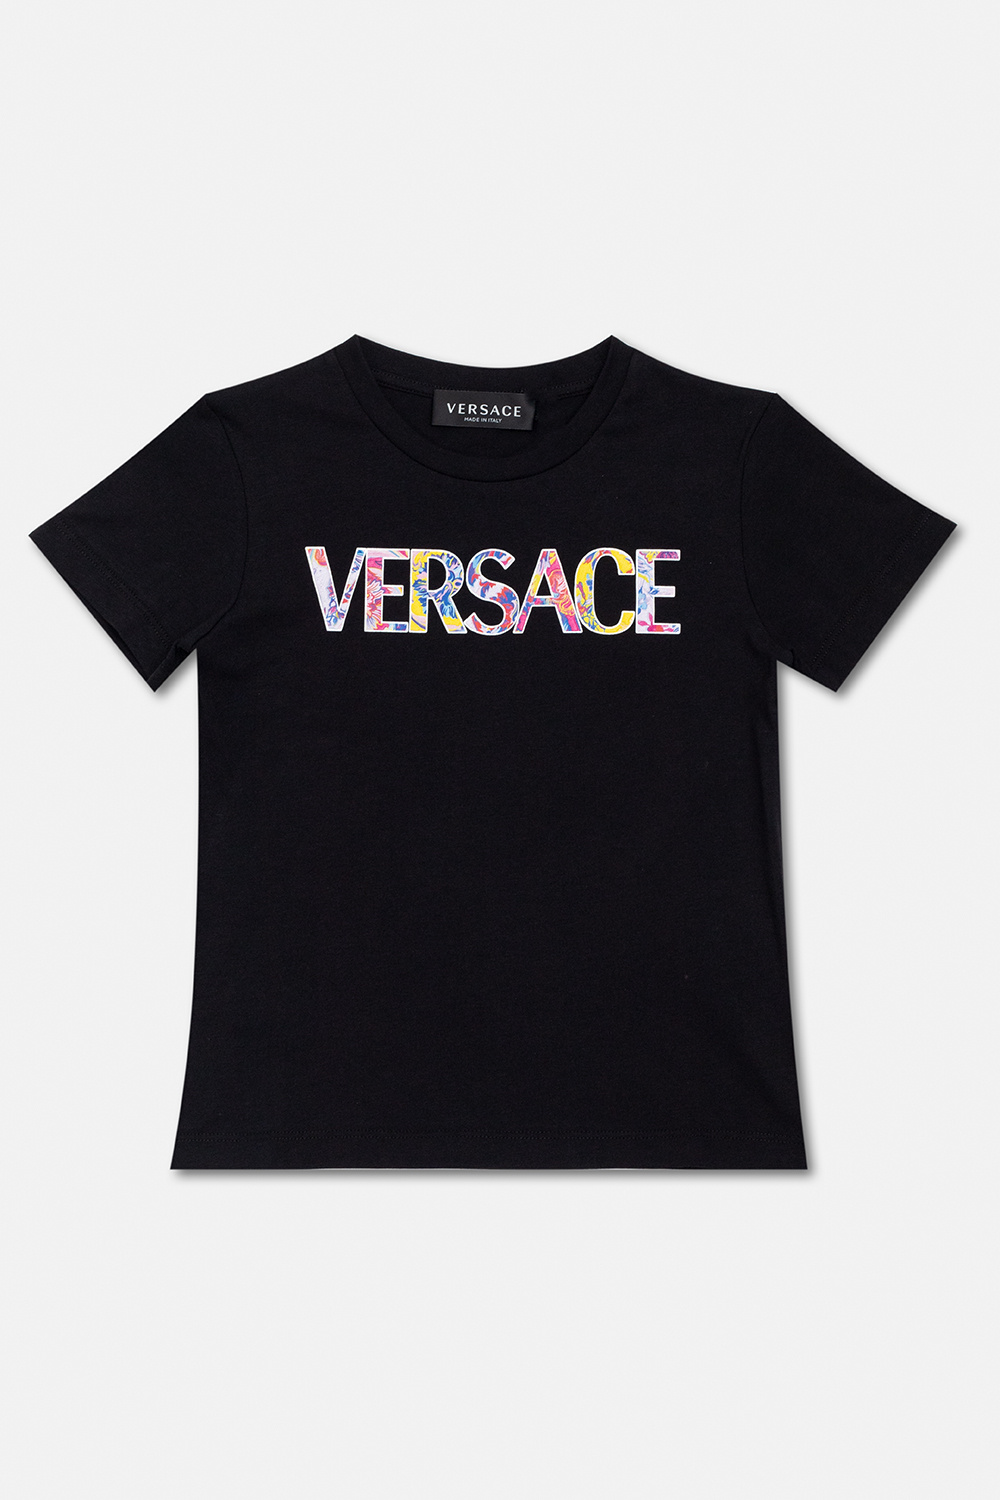 Versace Kids logo t shirt Alpha vivienne westwood sweater